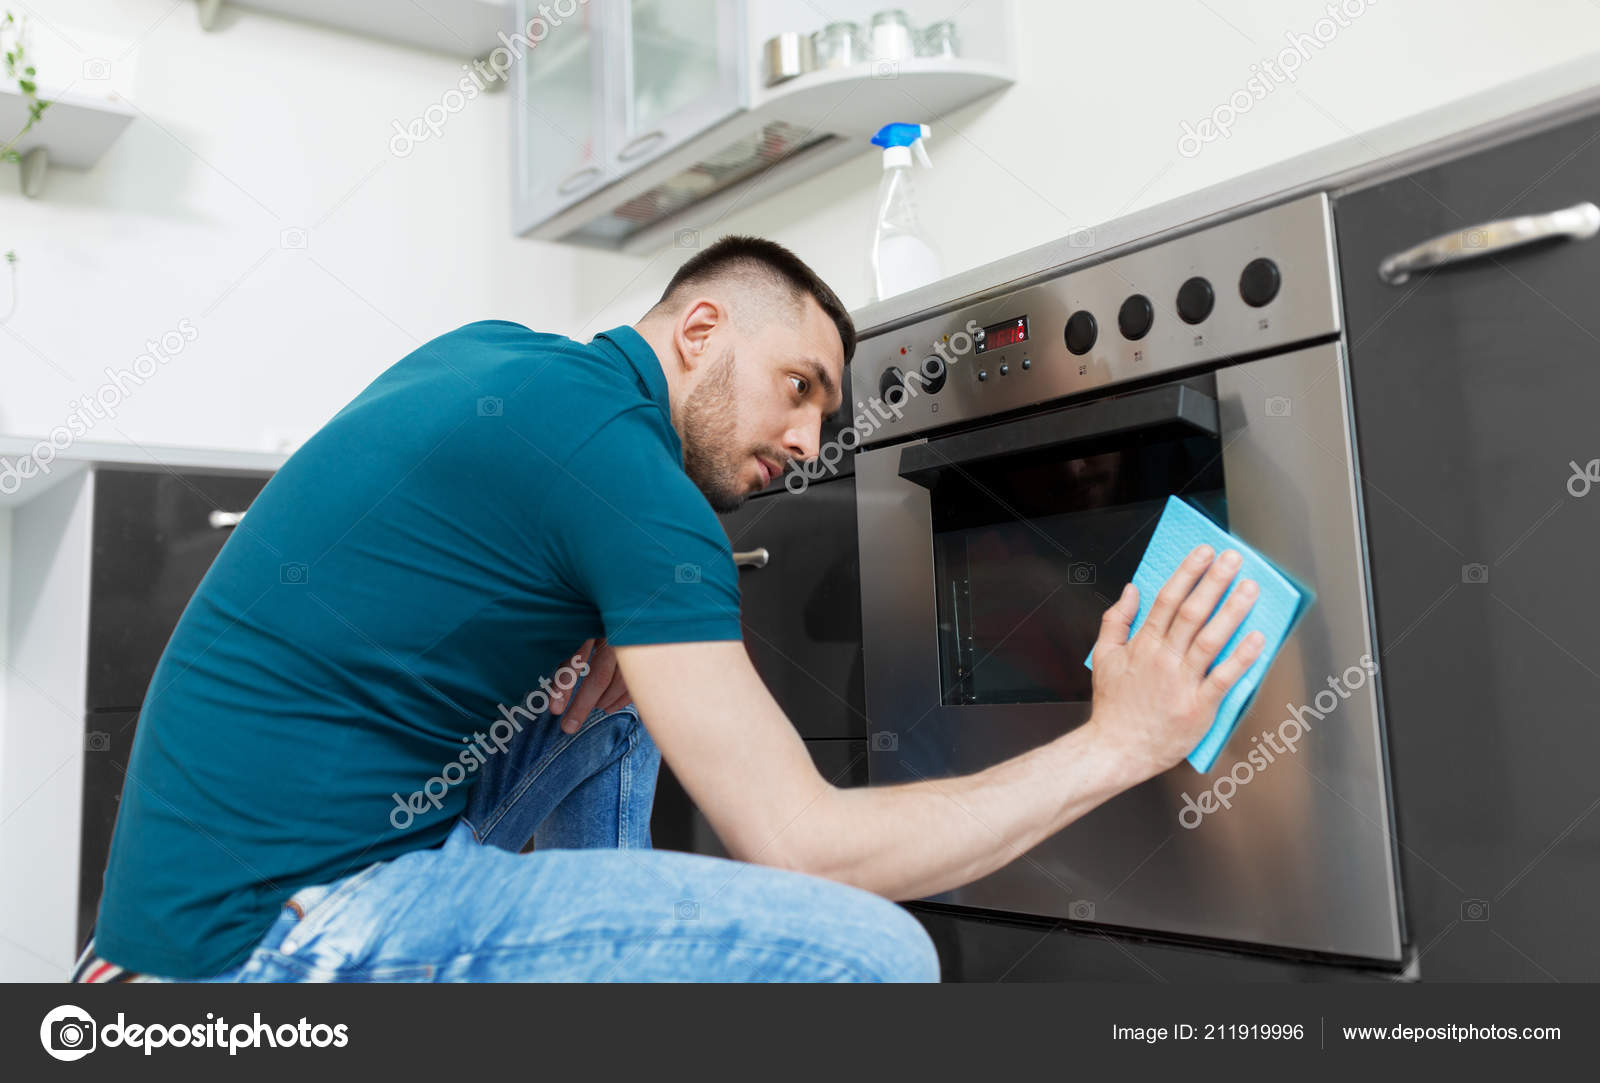 https://st4.depositphotos.com/1017986/21191/i/1600/depositphotos_211919996-stock-photo-man-with-rag-cleaning-oven.jpg